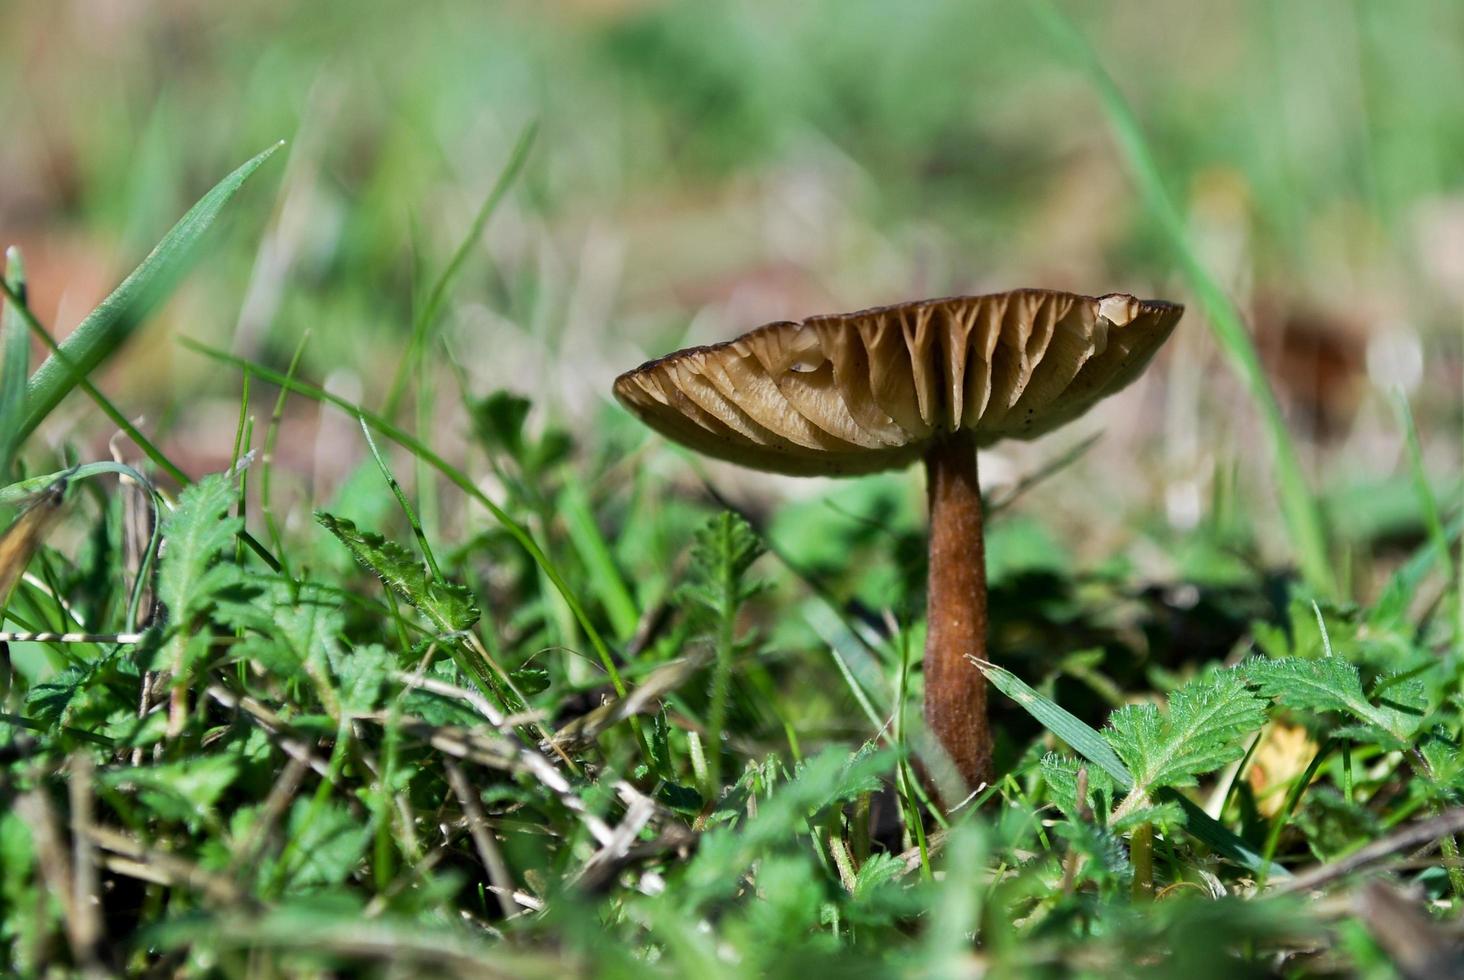 Wild fungus in grass photo